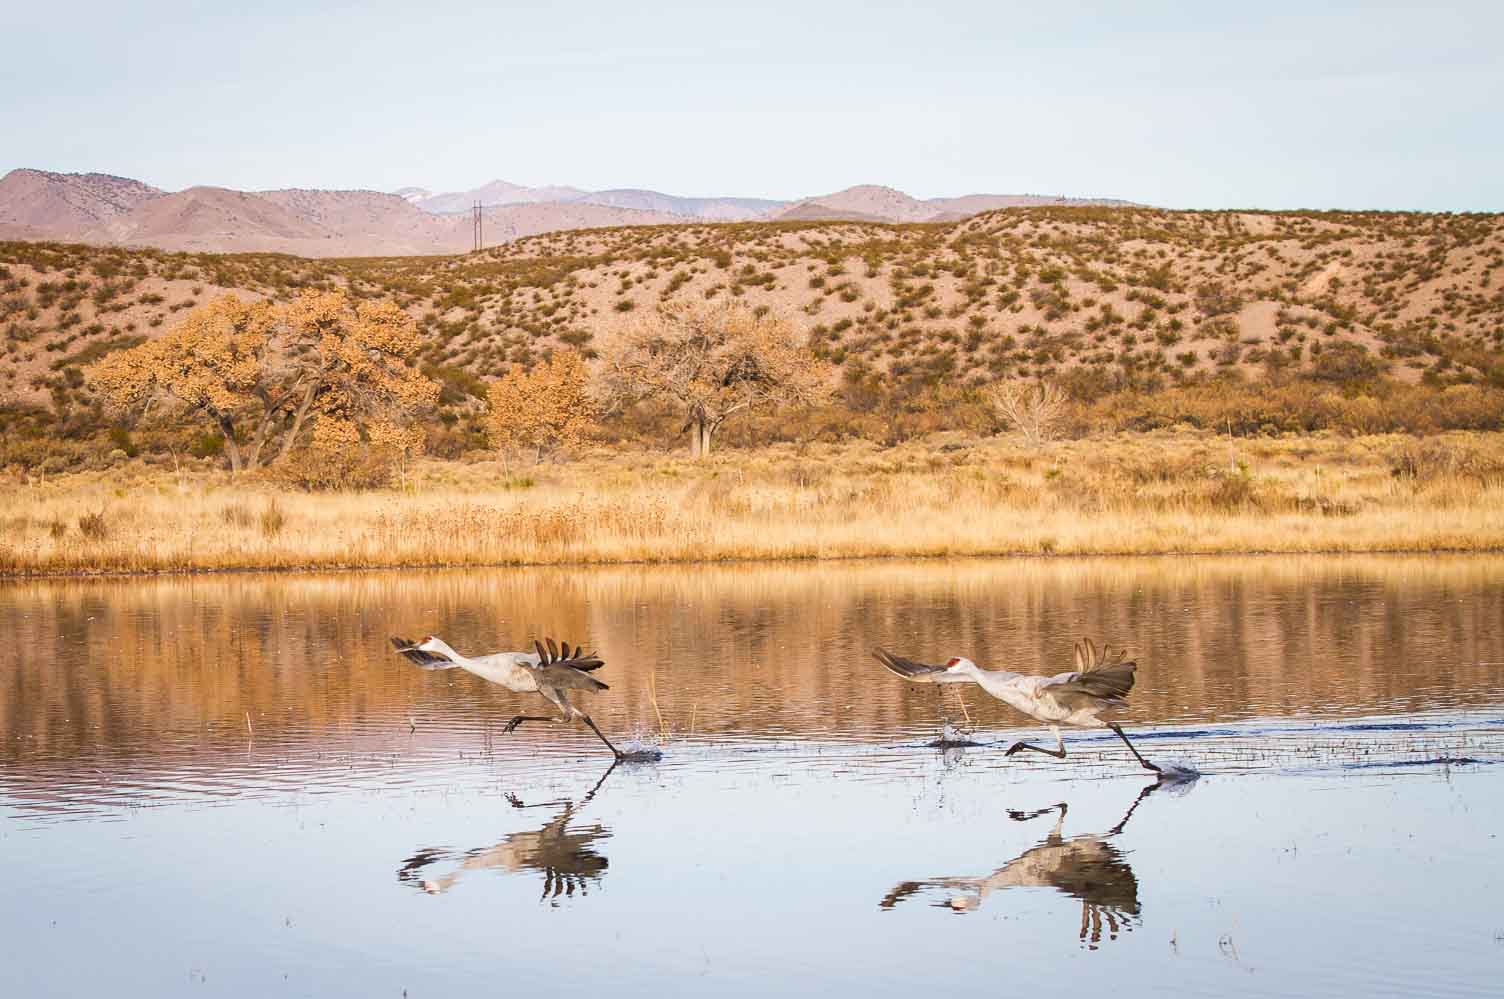 Liftoff, Sandhill Cranes, Bosque del Apache National Wildlife Refuge, San Antonio NM, December 6, 2012